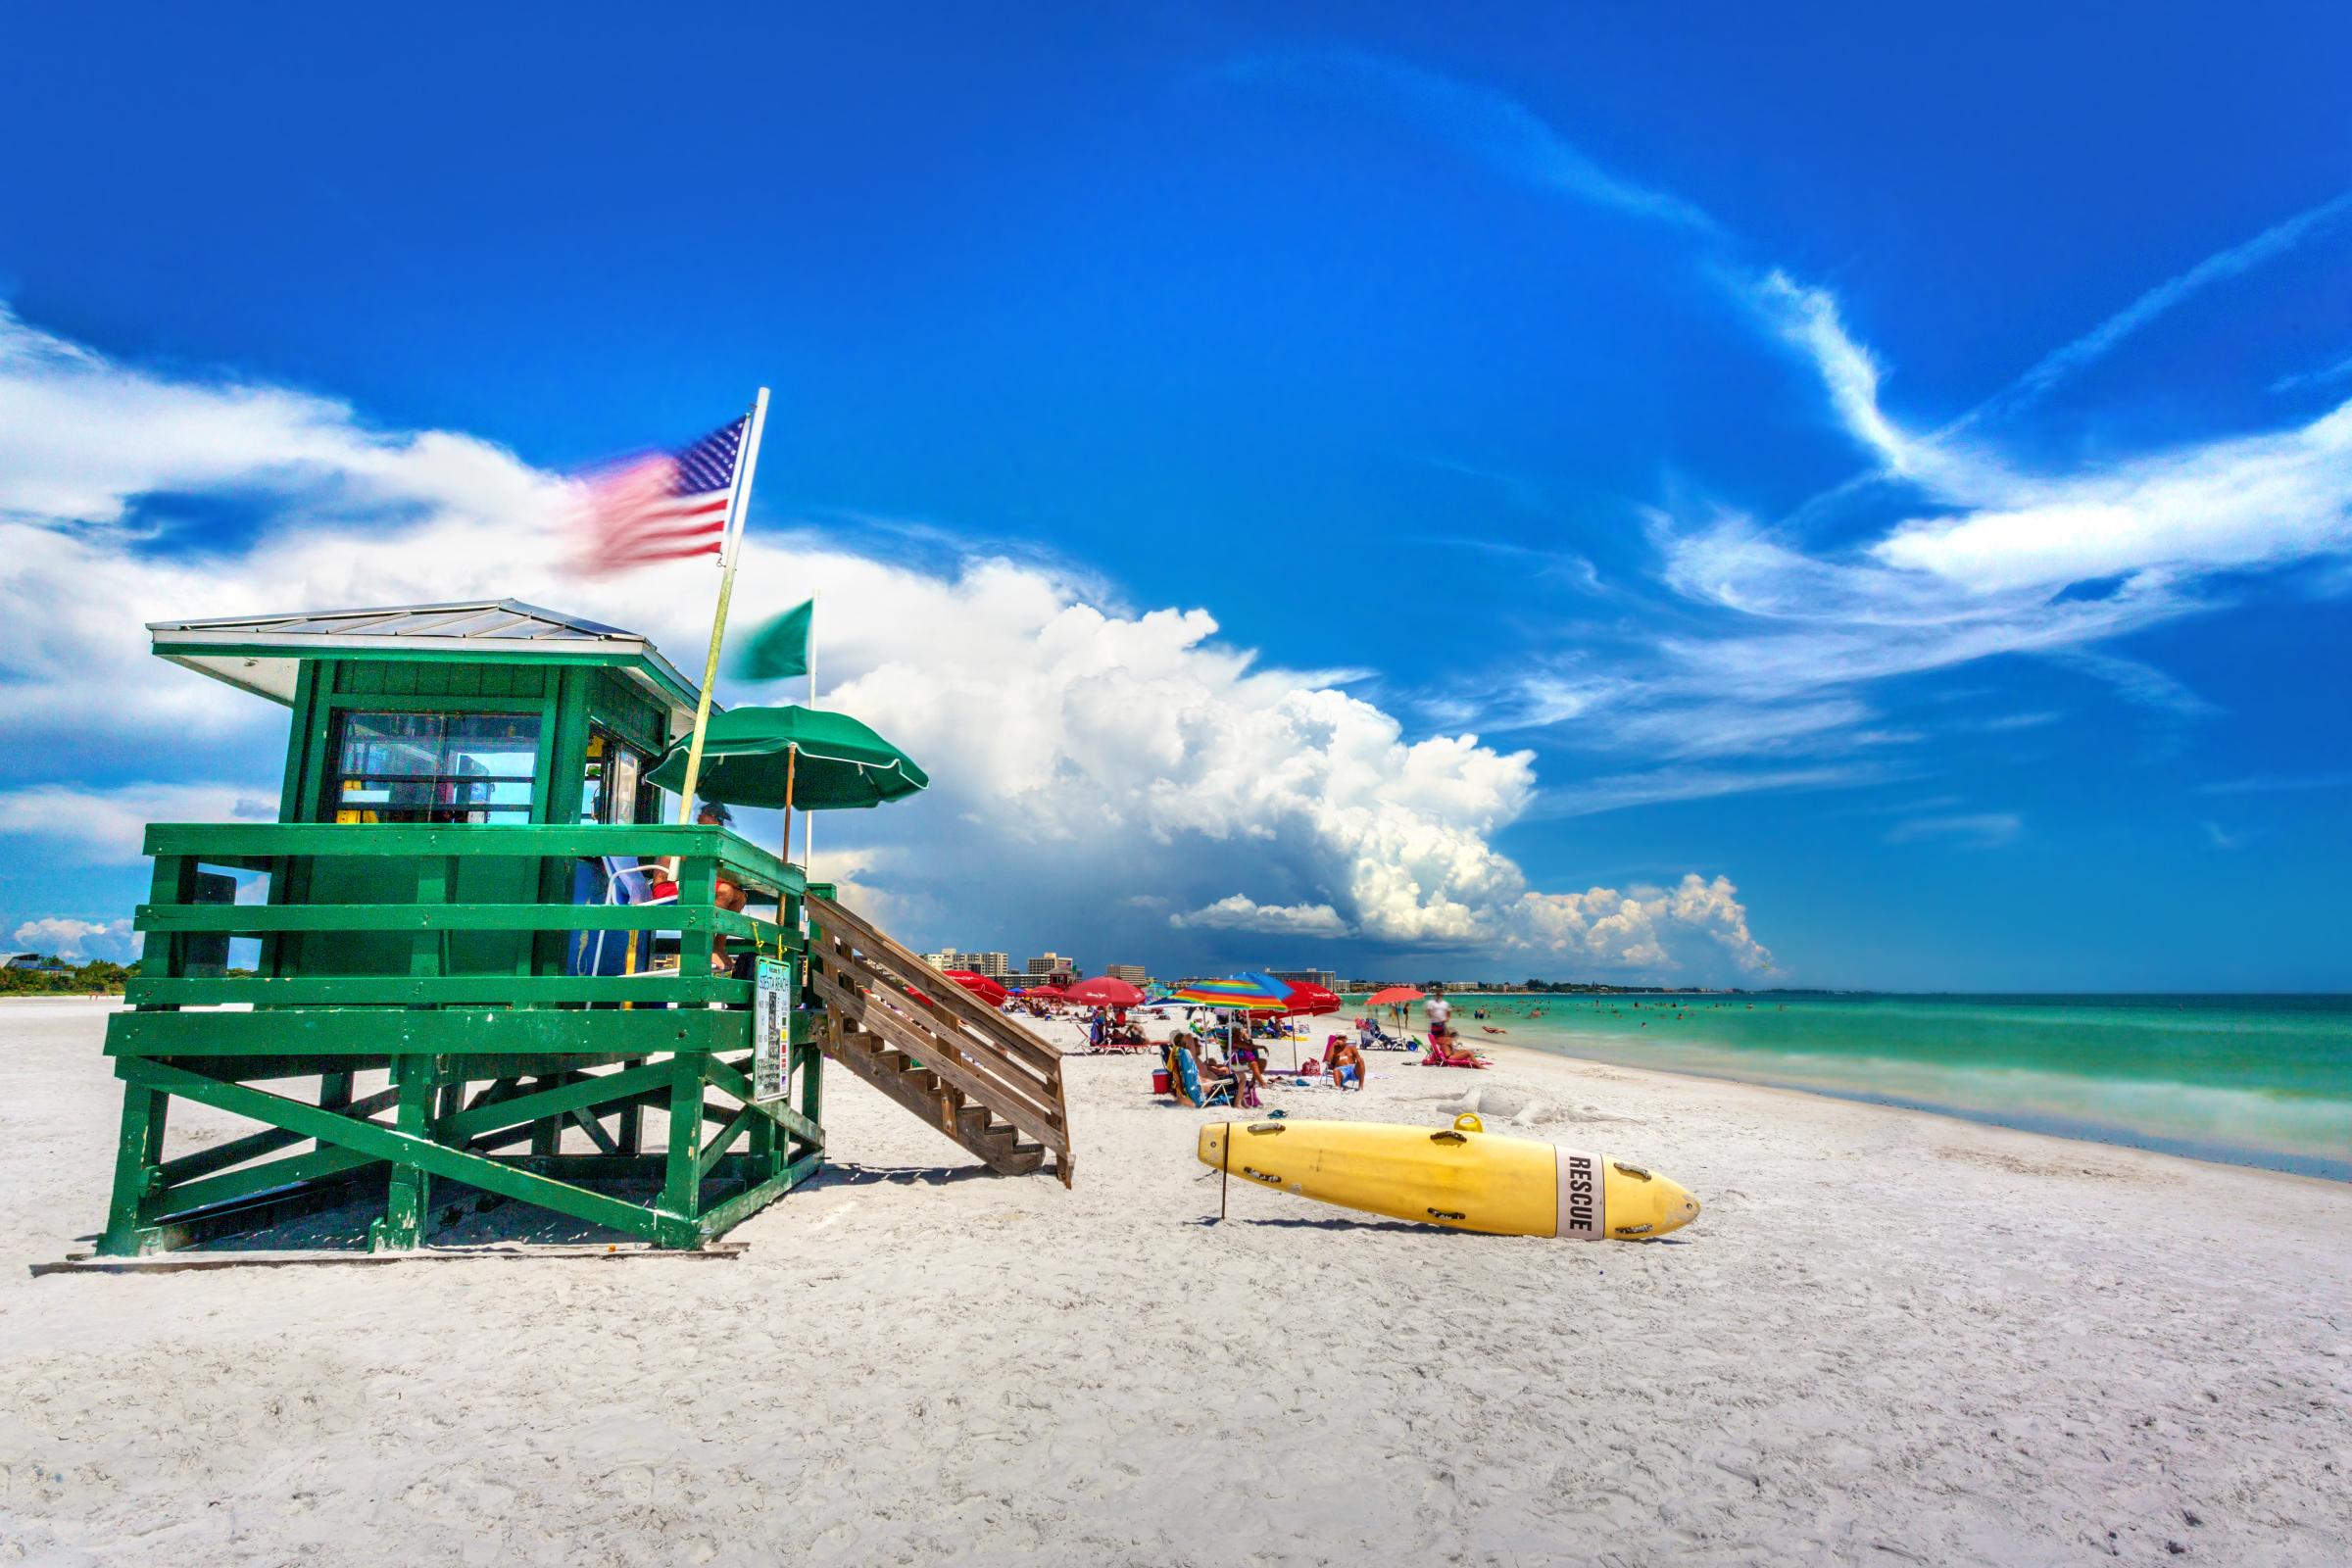 Coast Guard Beach house and beach, Siesta Key, Sarasota, Florida, USA